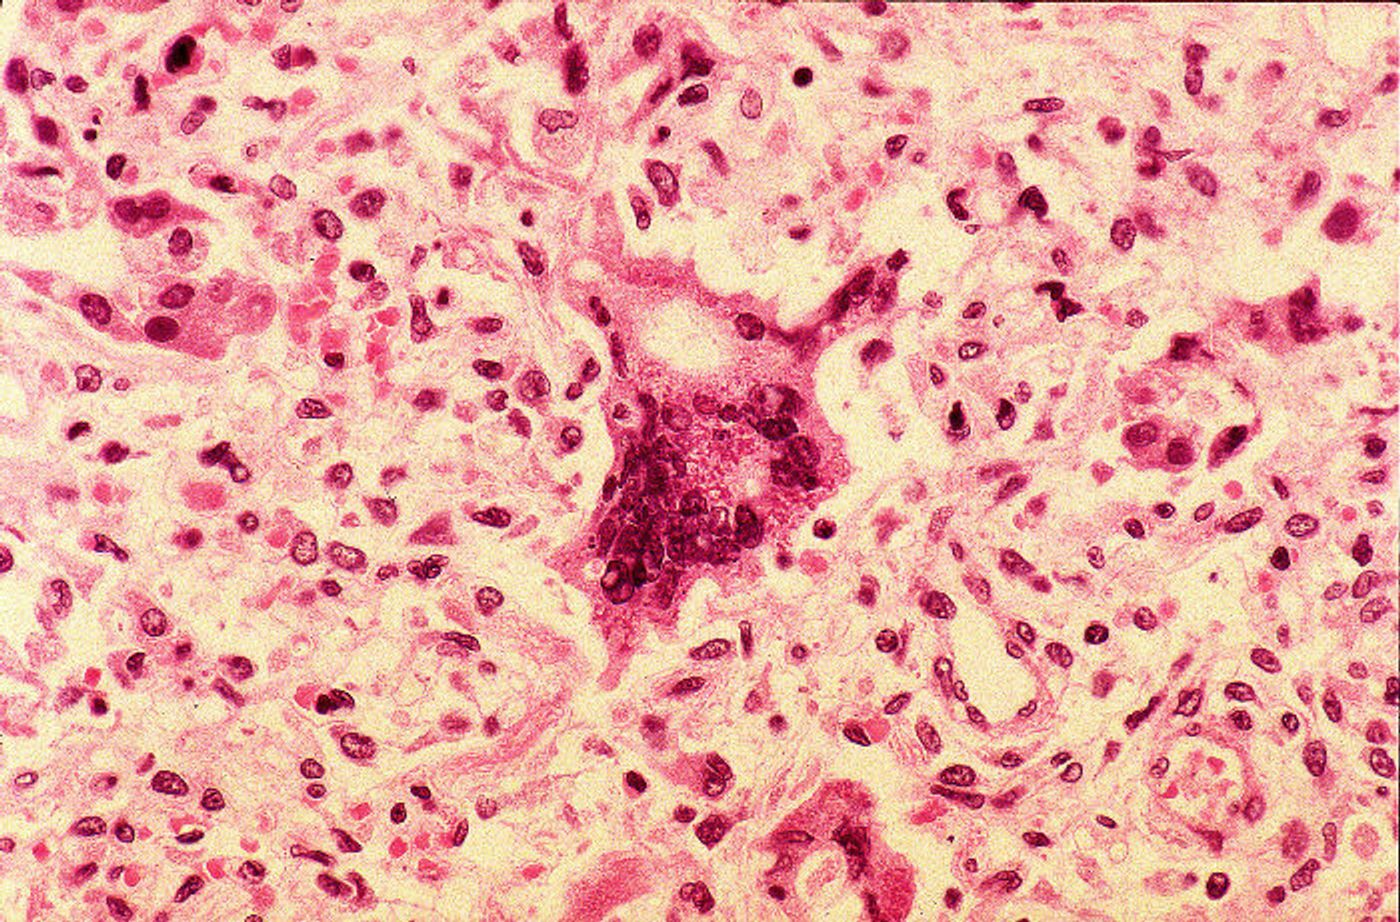 Histopathology of measles pneumonia. Credit: CDC